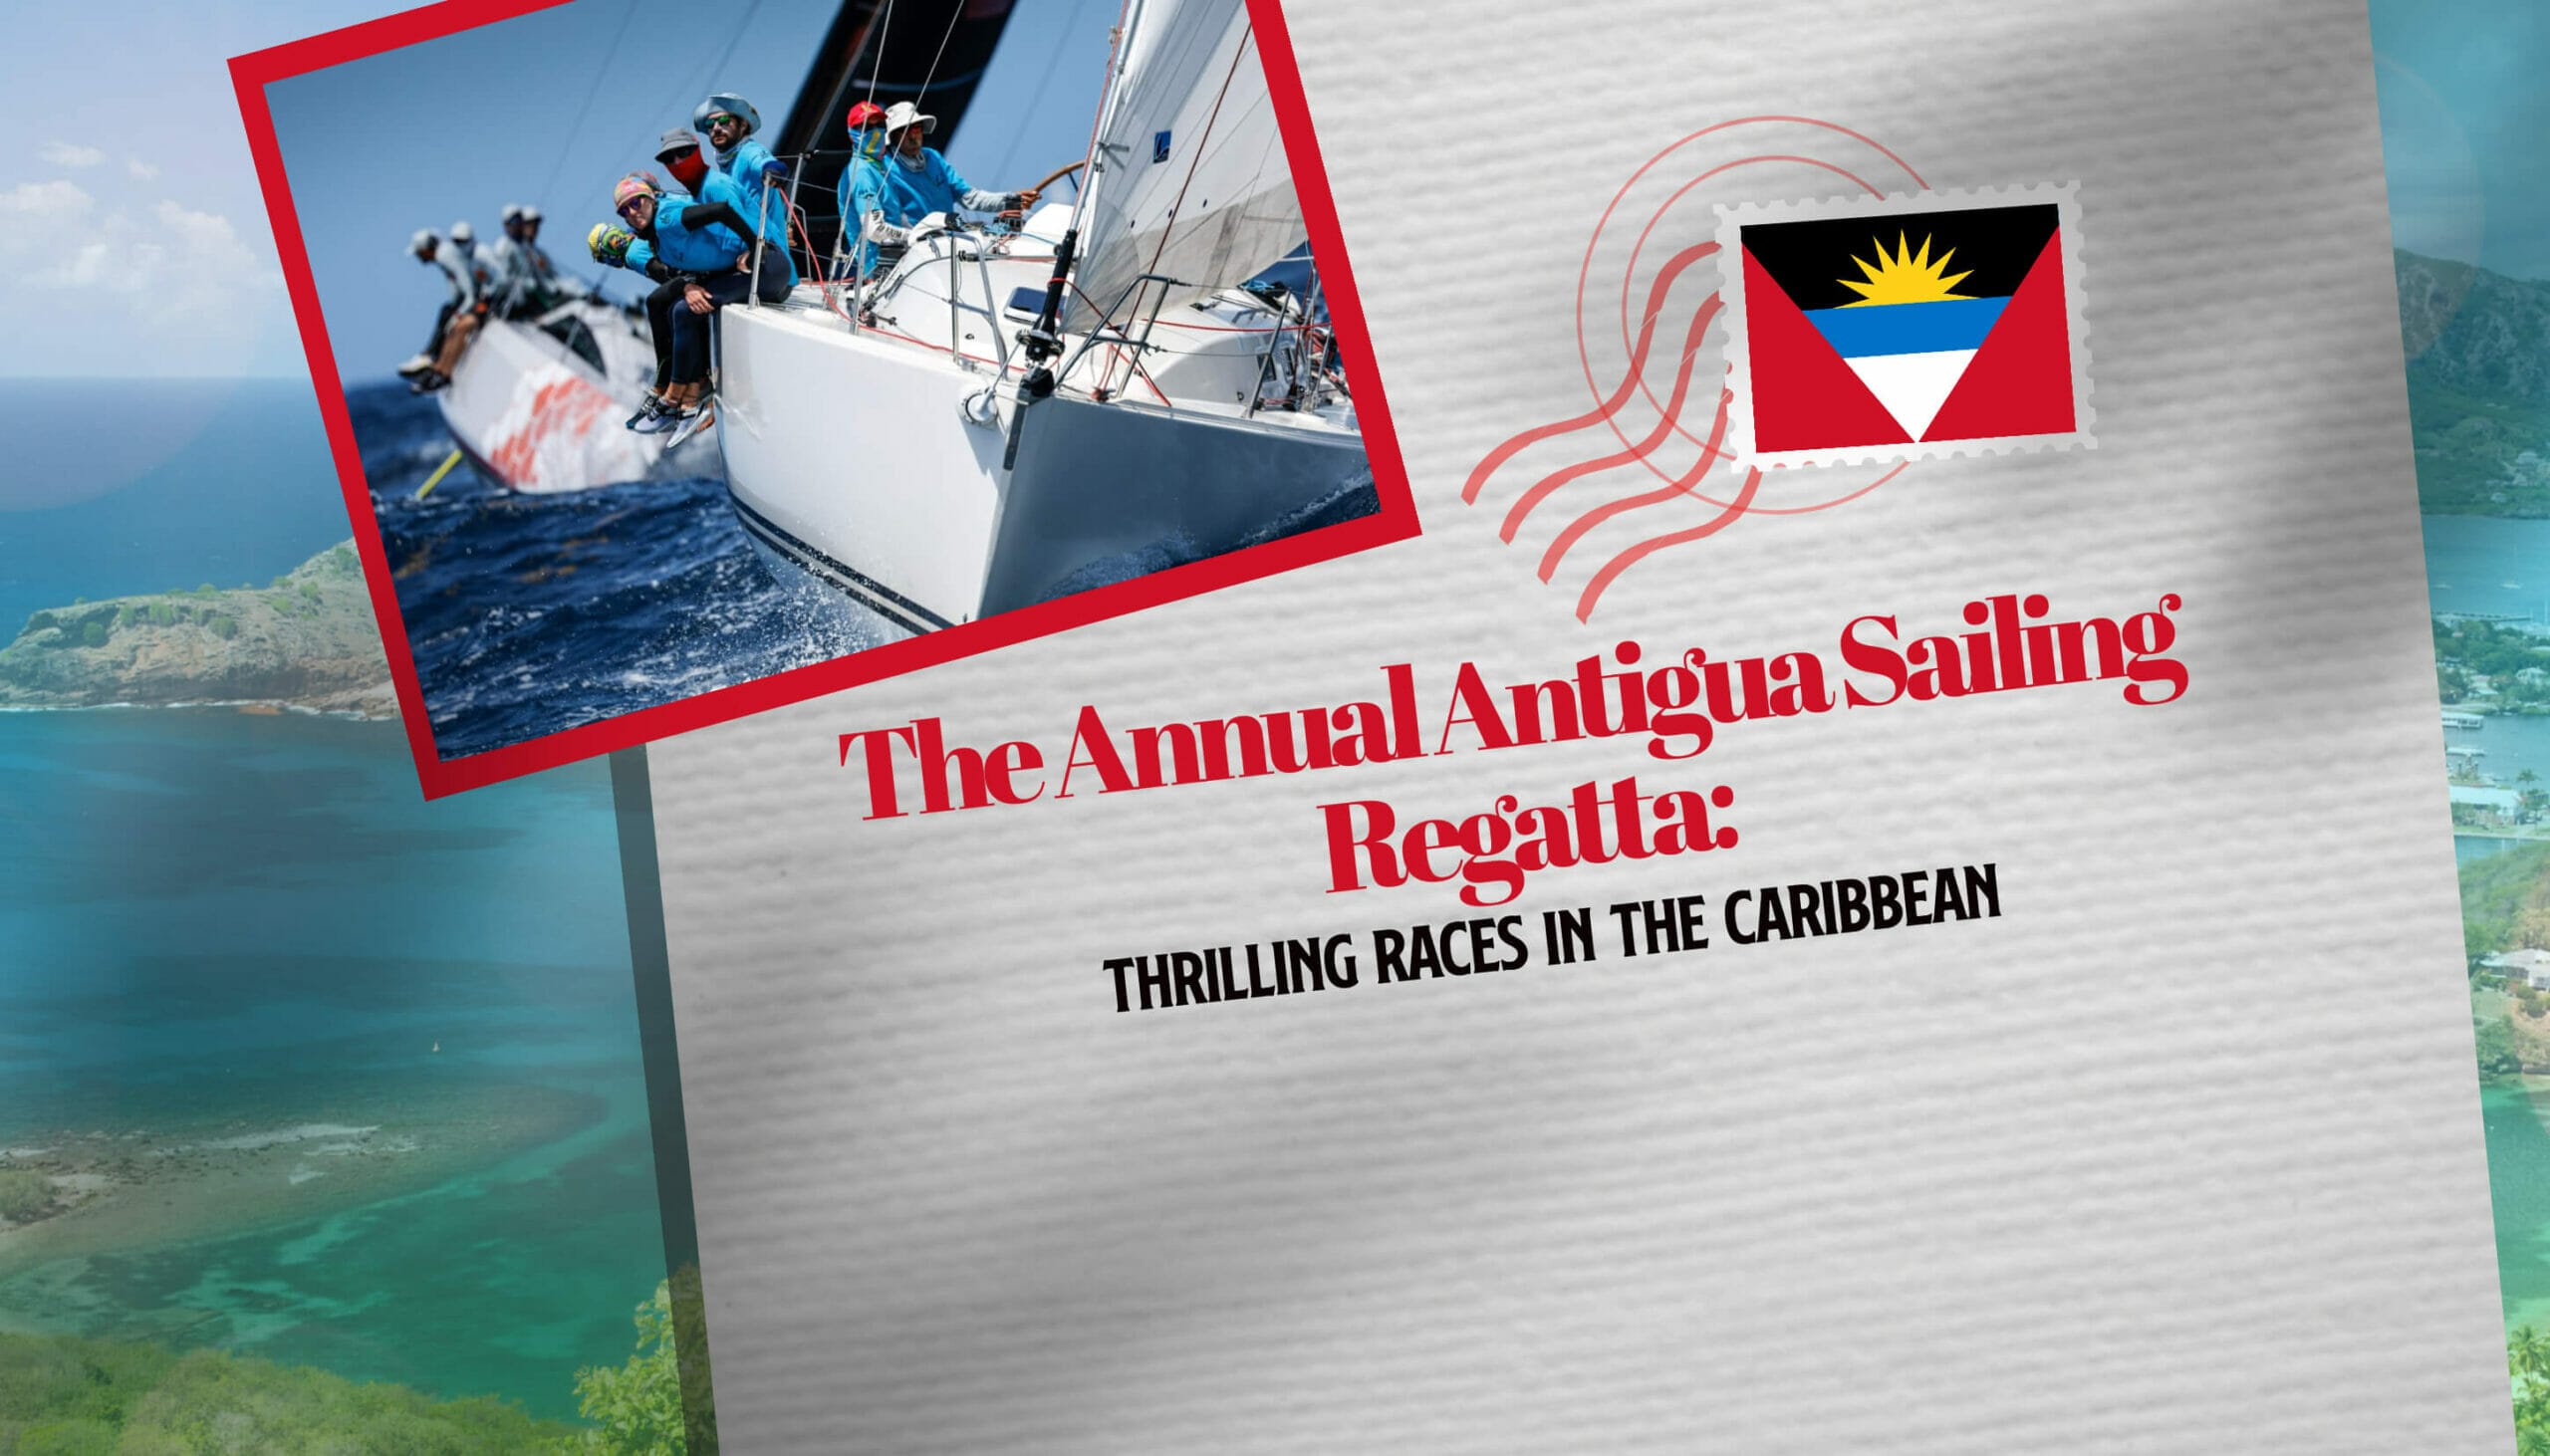 The Annual Antigua Sailing Regatta Thrilling Races in the Caribbean